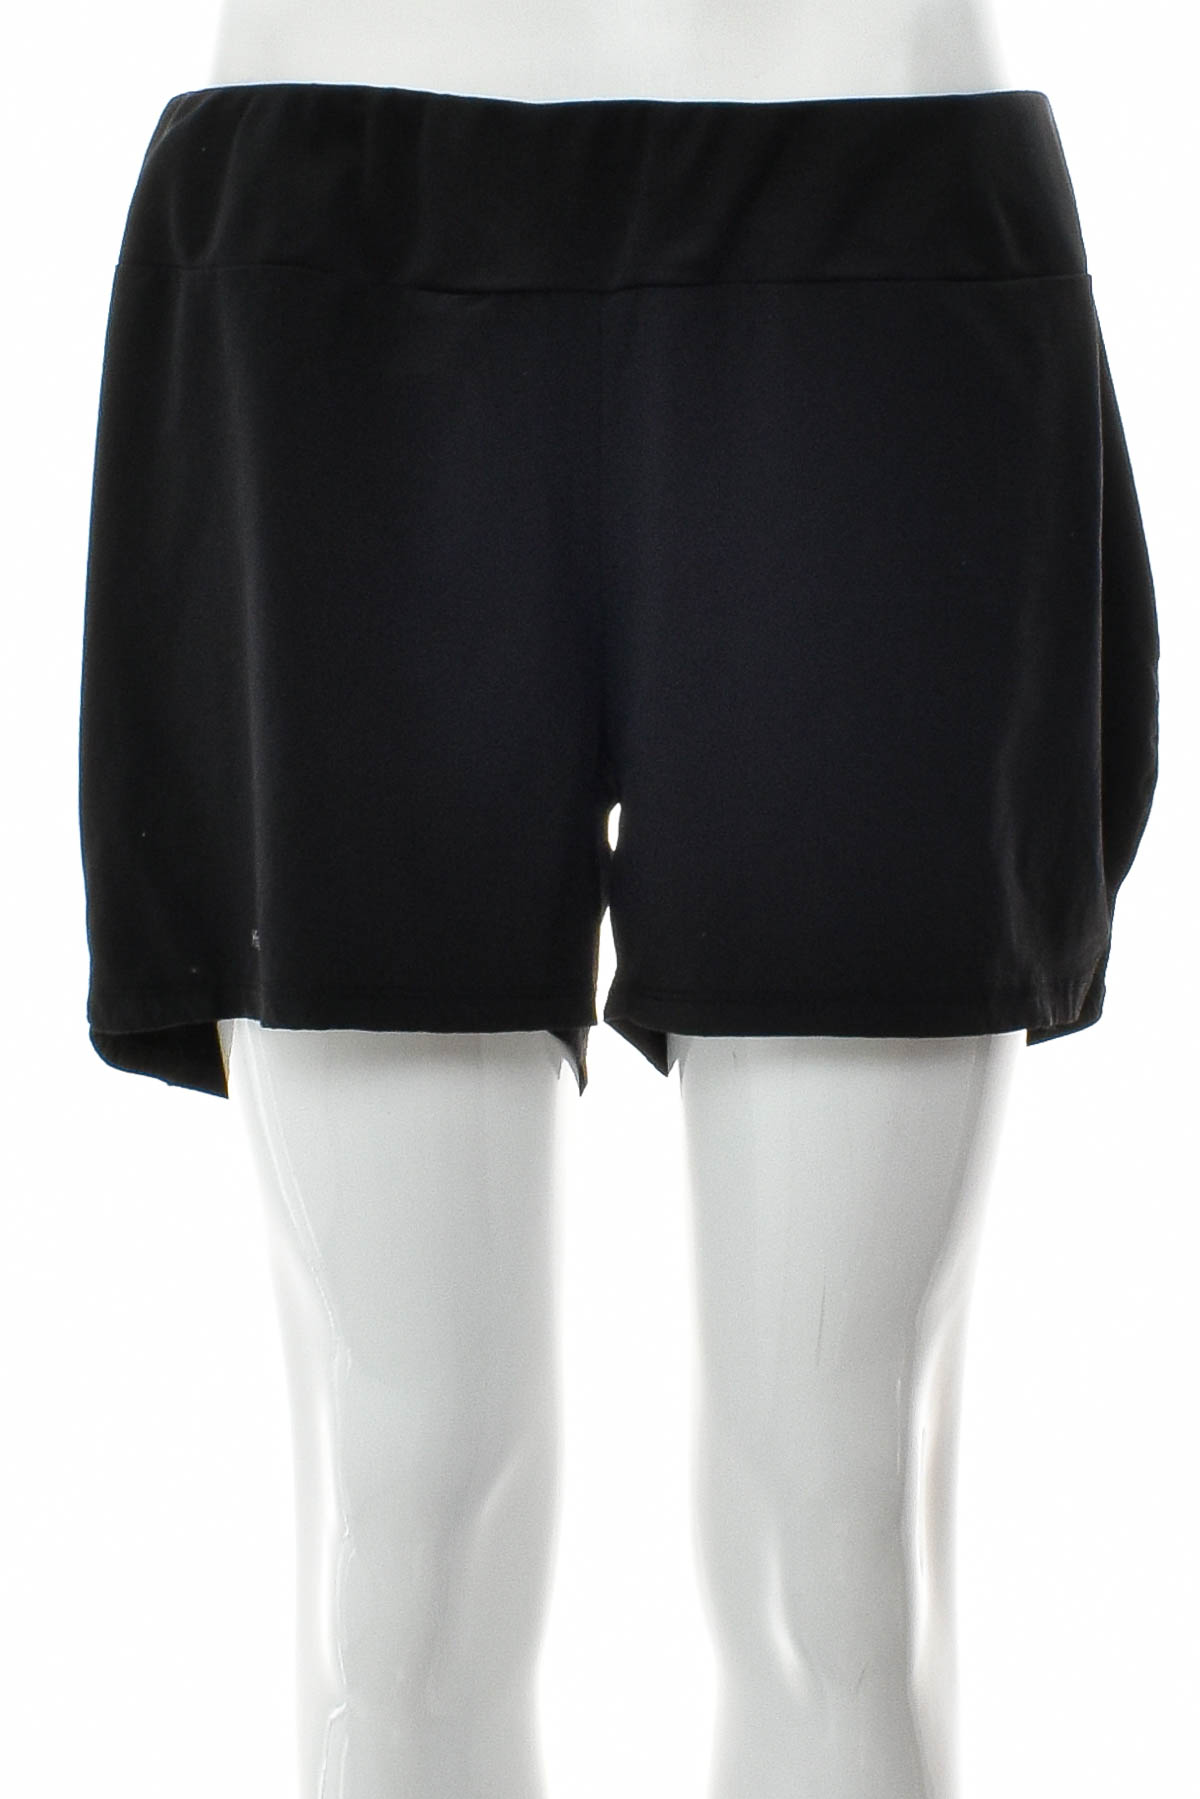 Female shorts - DECATHLON - 0